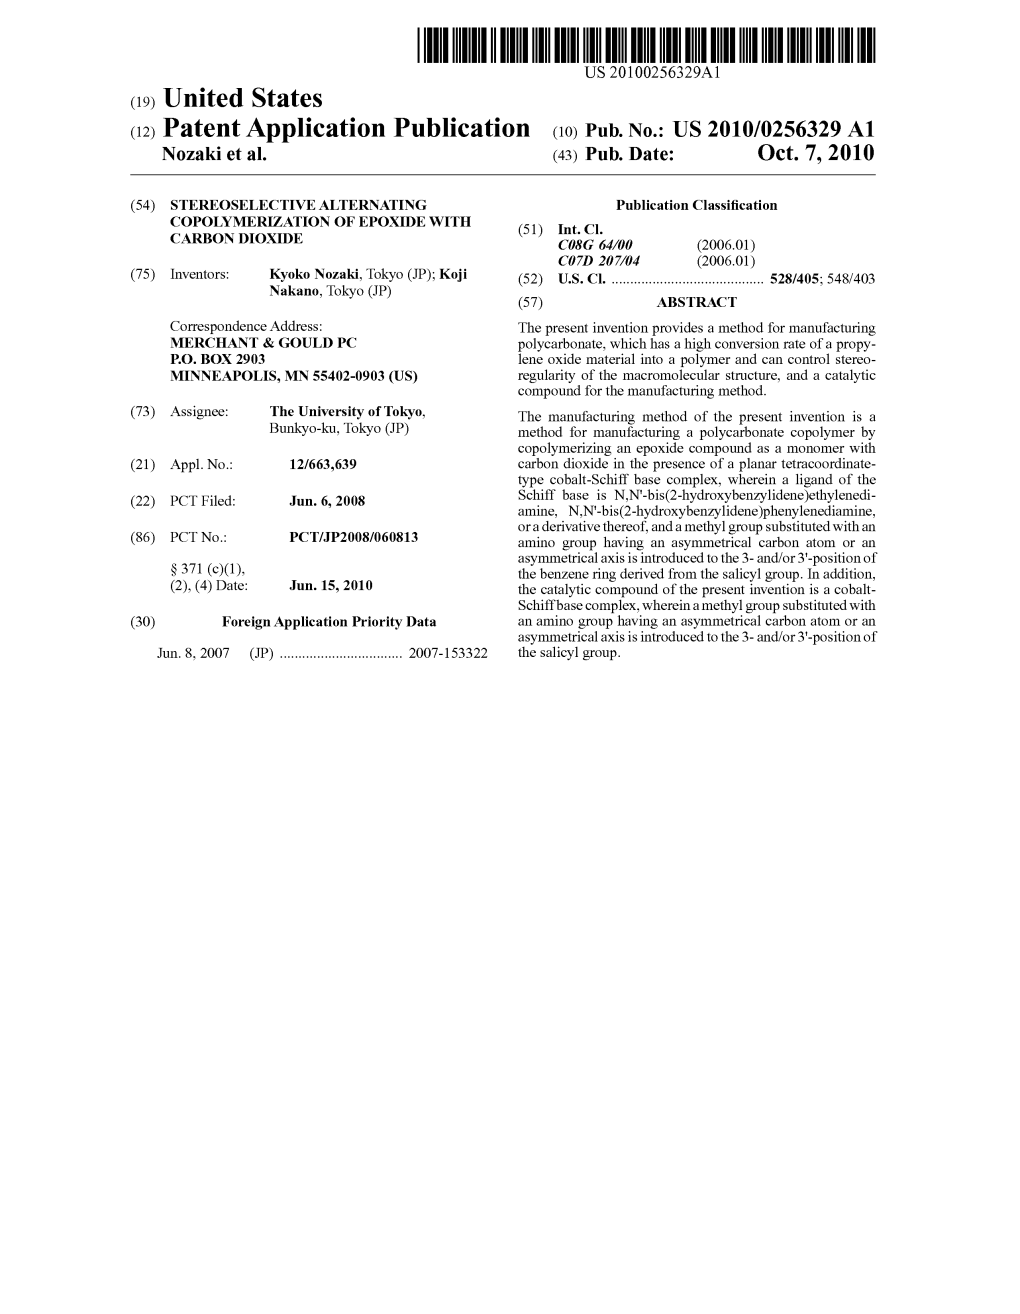 (12) Patent Application Publication (10) Pub. No.: US 2010/0256329 A1 Nozaki Et Al